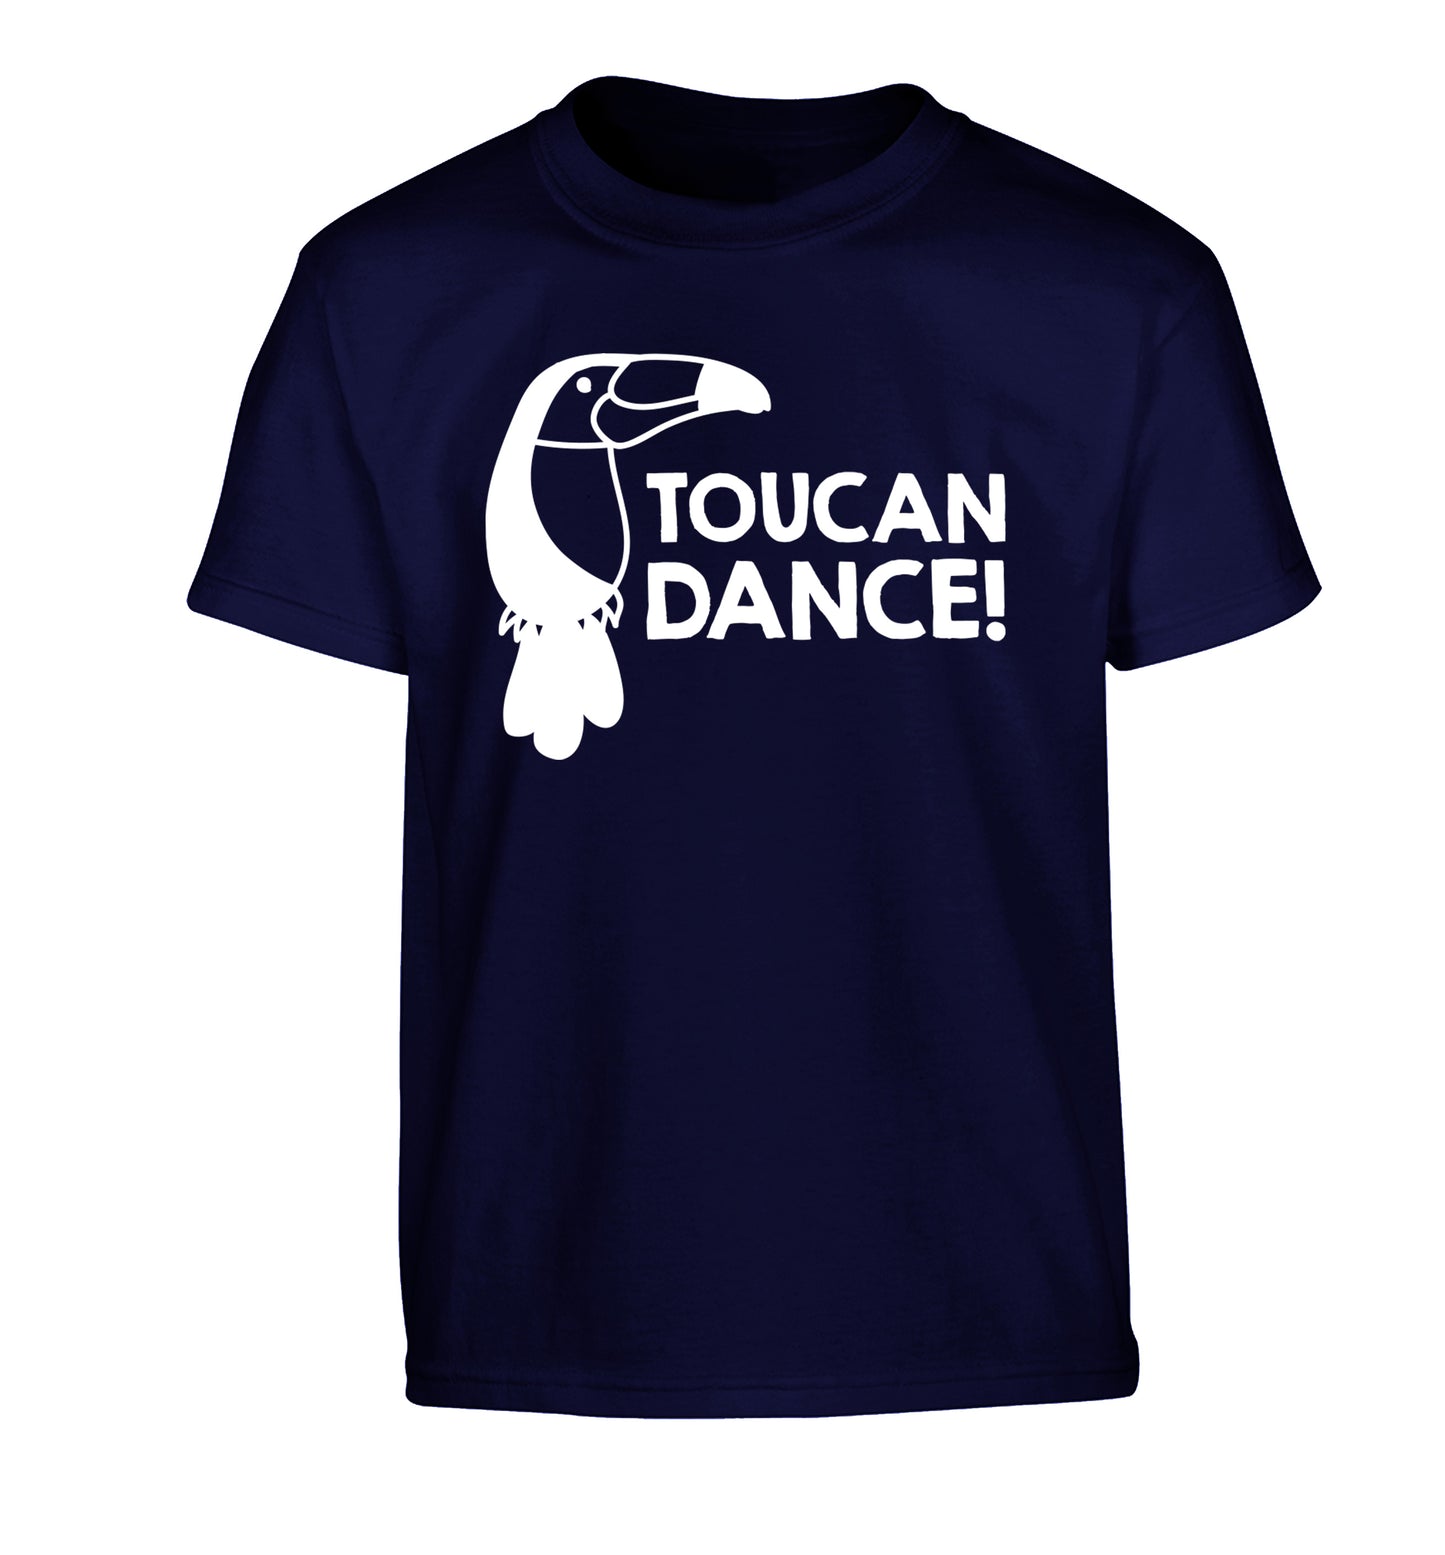 Toucan dance Children's navy Tshirt 12-13 Years